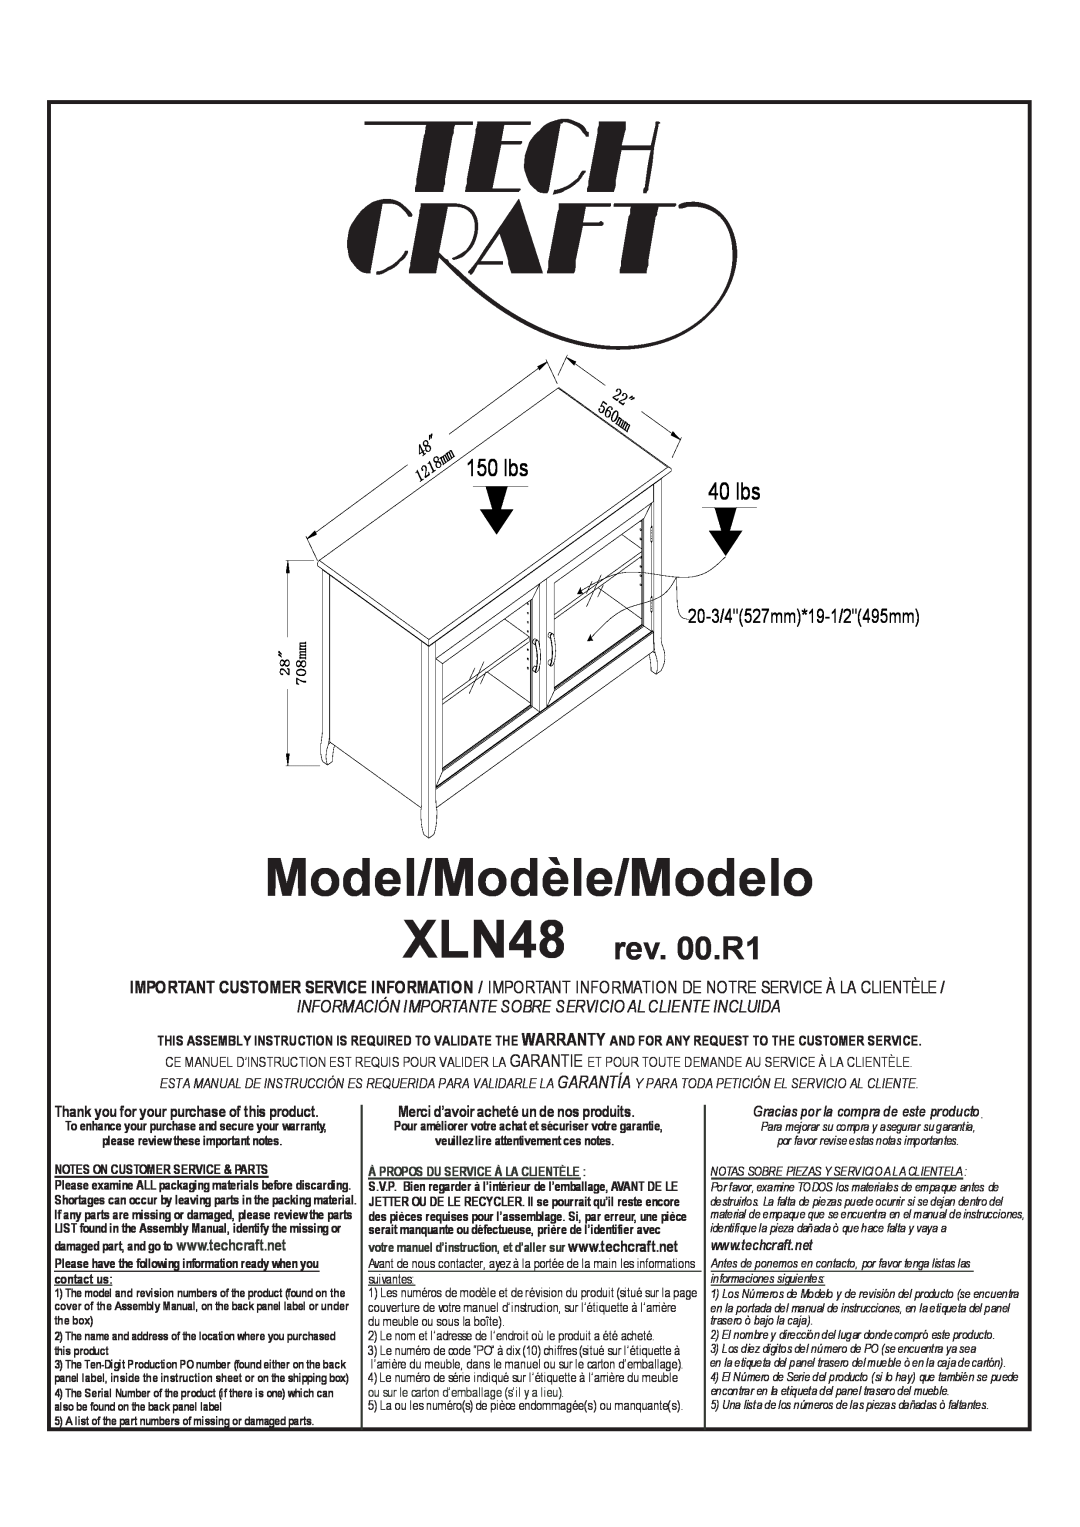 Tech Craft manual Model/Modèle/Modelo, XLN48 rev. 00.R1, lbs 40 lbs, 20-3/4527mm*19-1/2495mm, suivantes, the box 